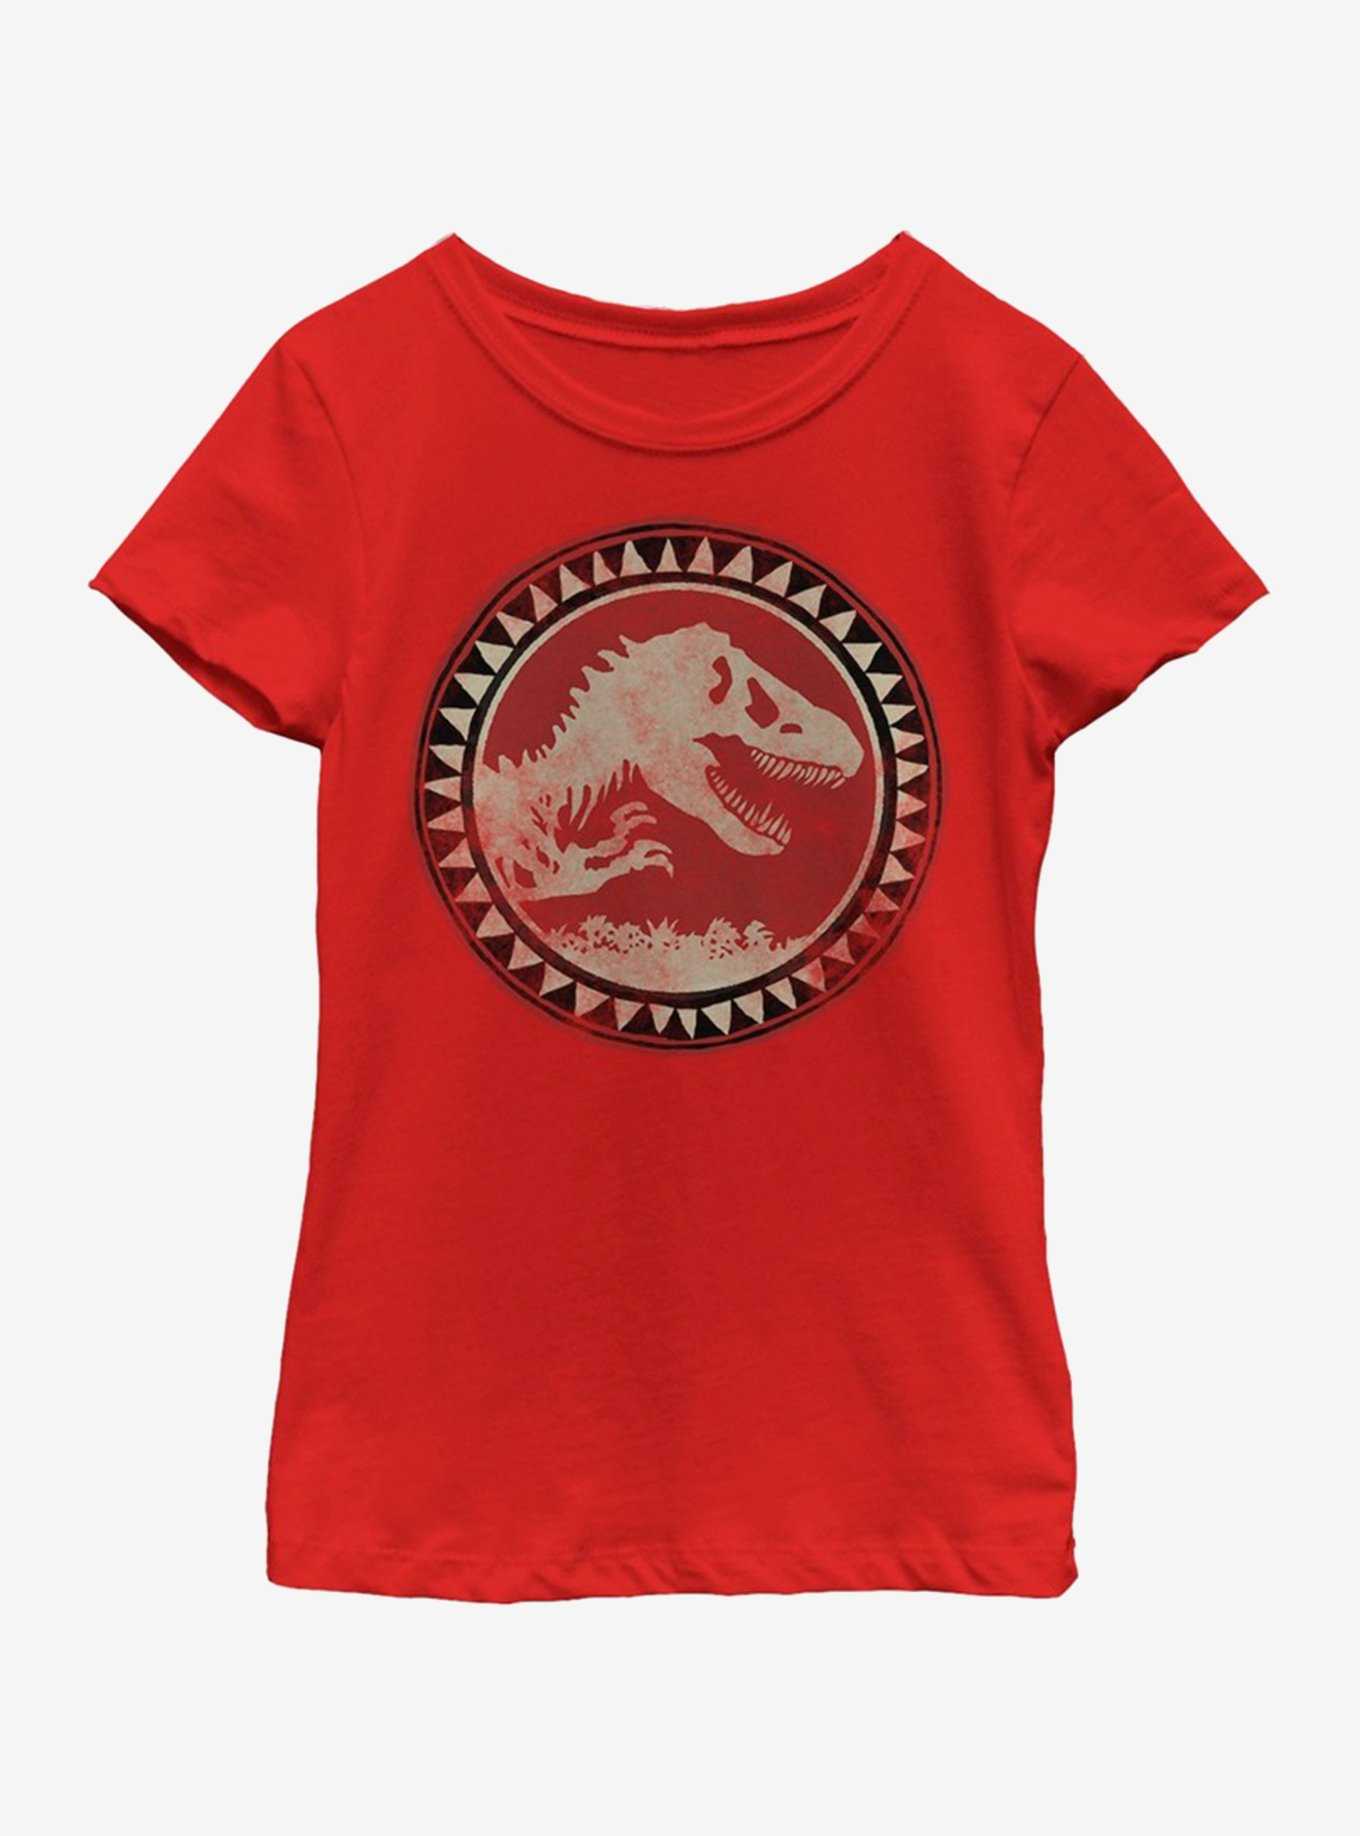 Jurassic Park Wild Jurassic Youth Girls T-Shirt, , hi-res